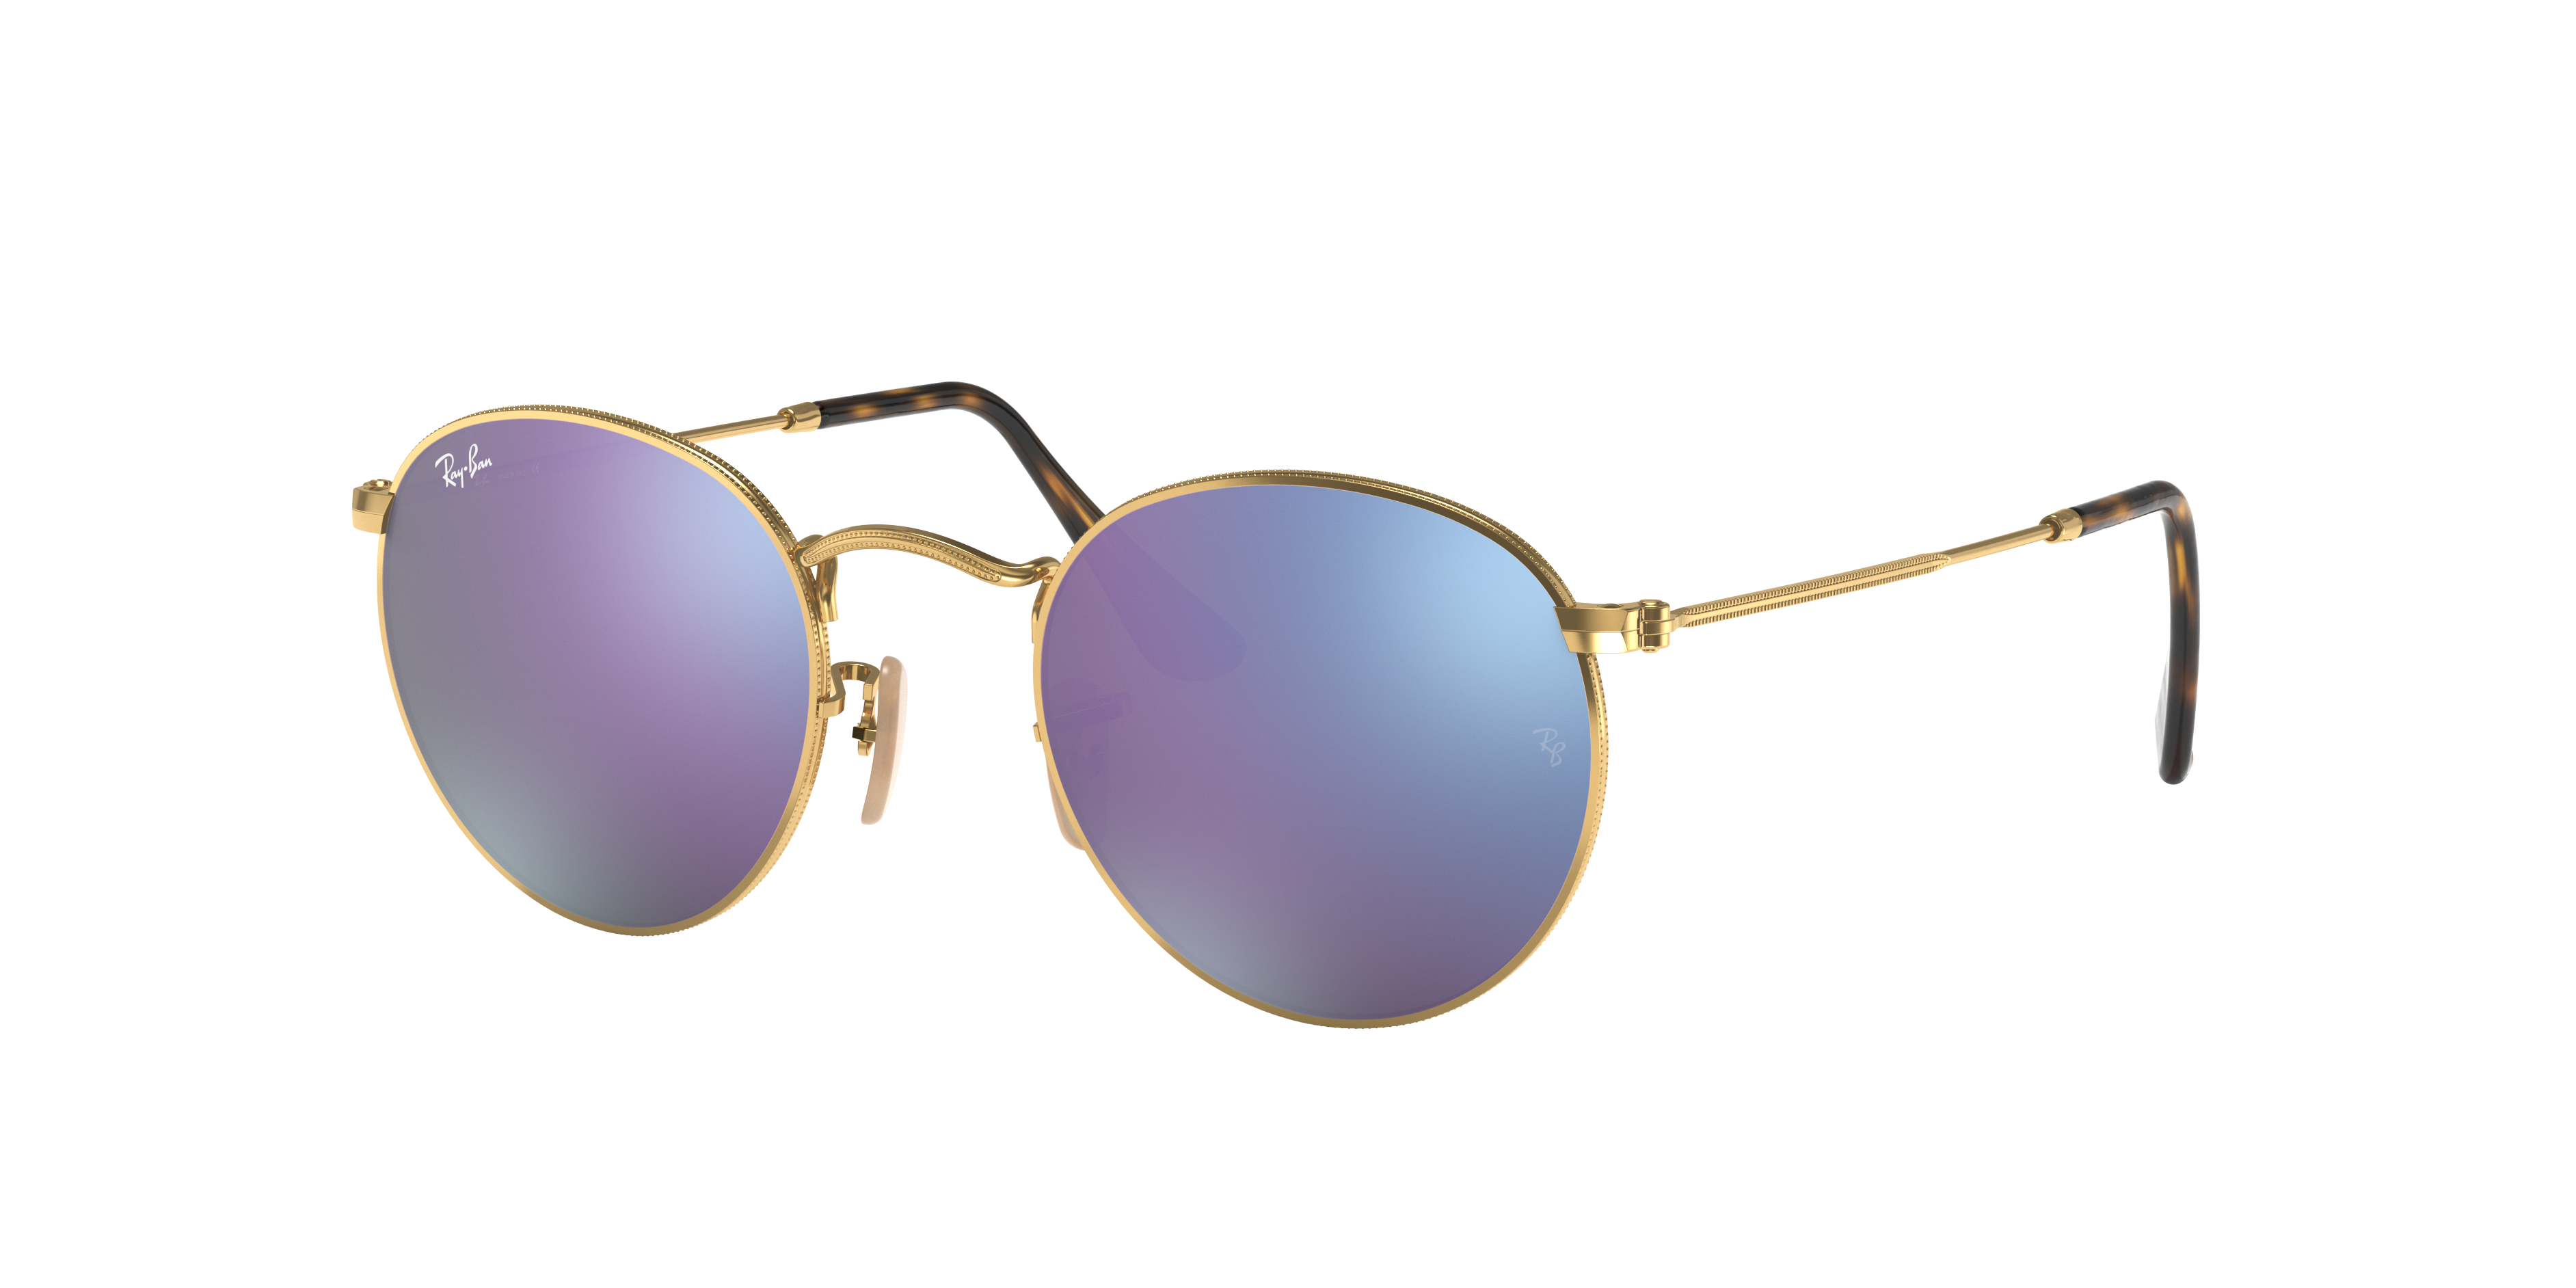 ray ban sunglasses purple lens